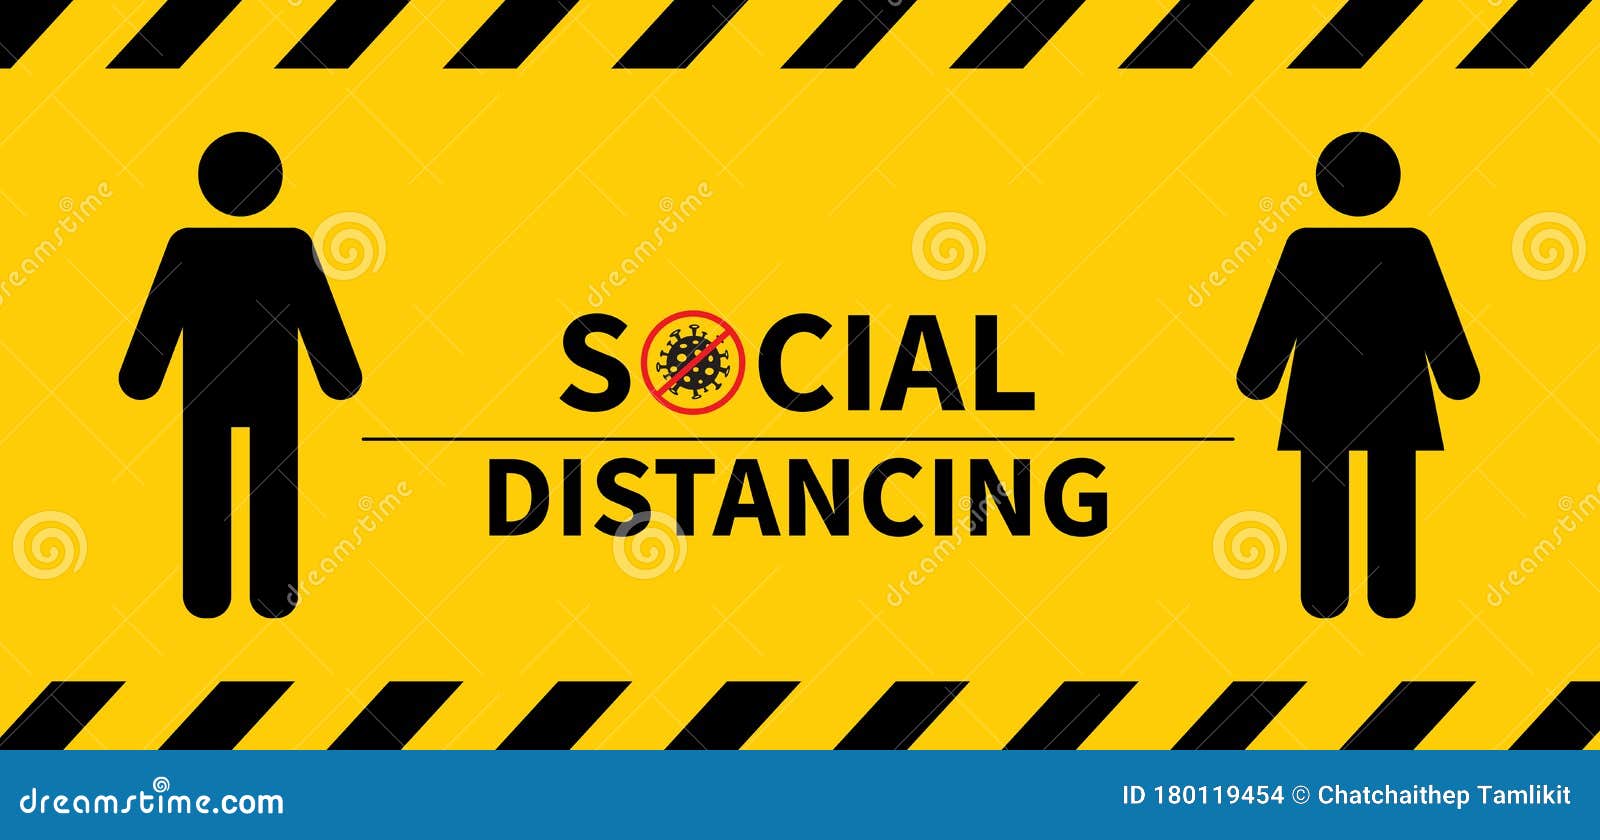 social distancing. keep the 1-2 meter distance. coronovirus epidemic protective. 